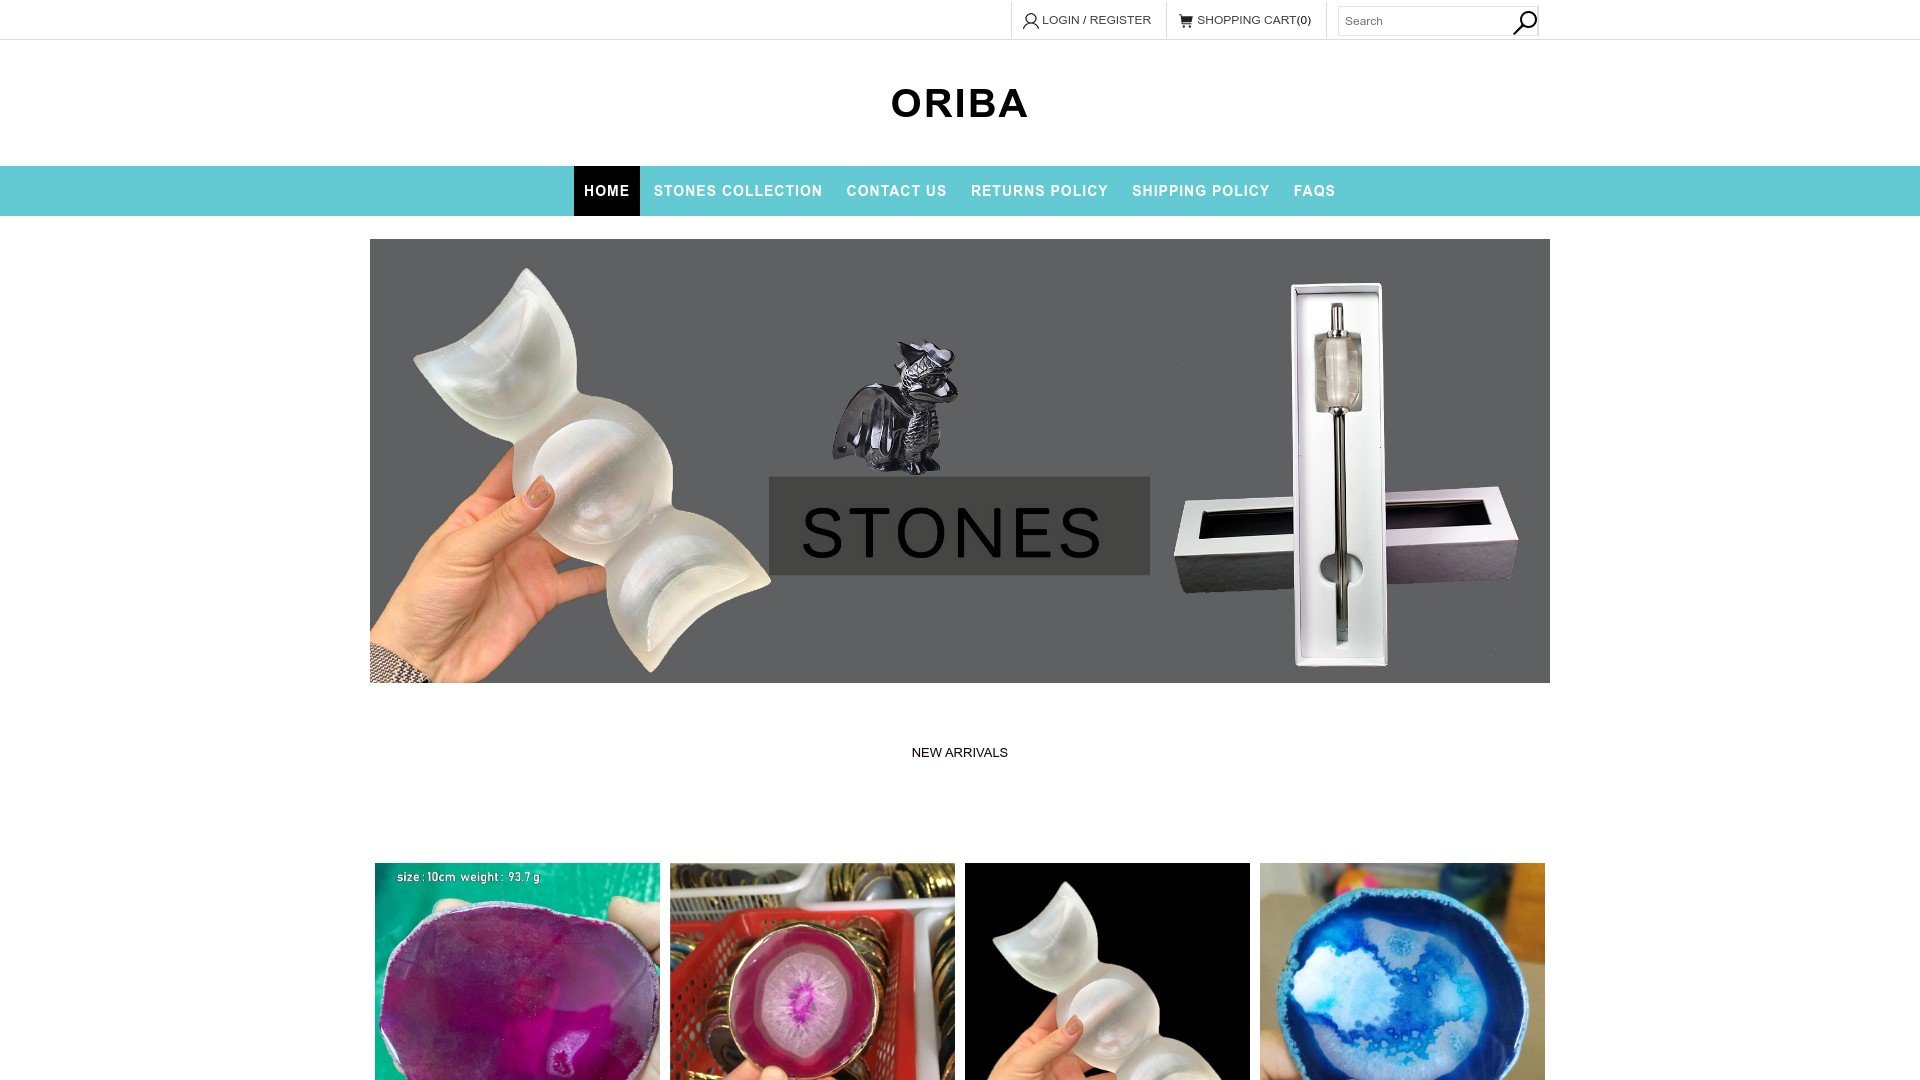 Oriba Space located at oriba.space